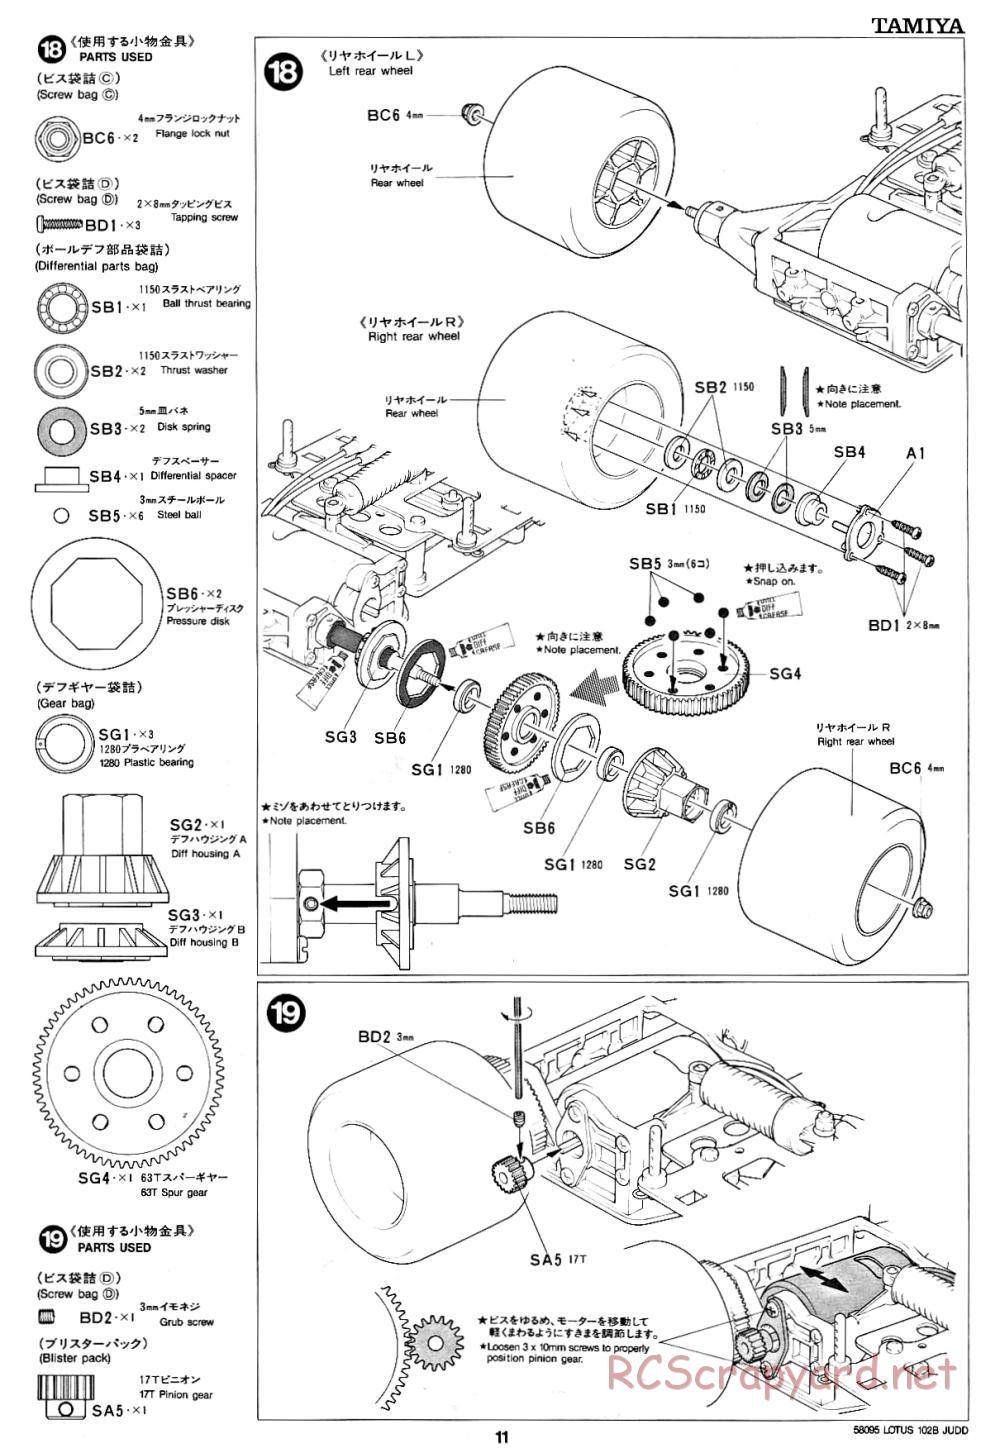 Tamiya - Lotus 102B Judd - 58095 - Manual - Page 11